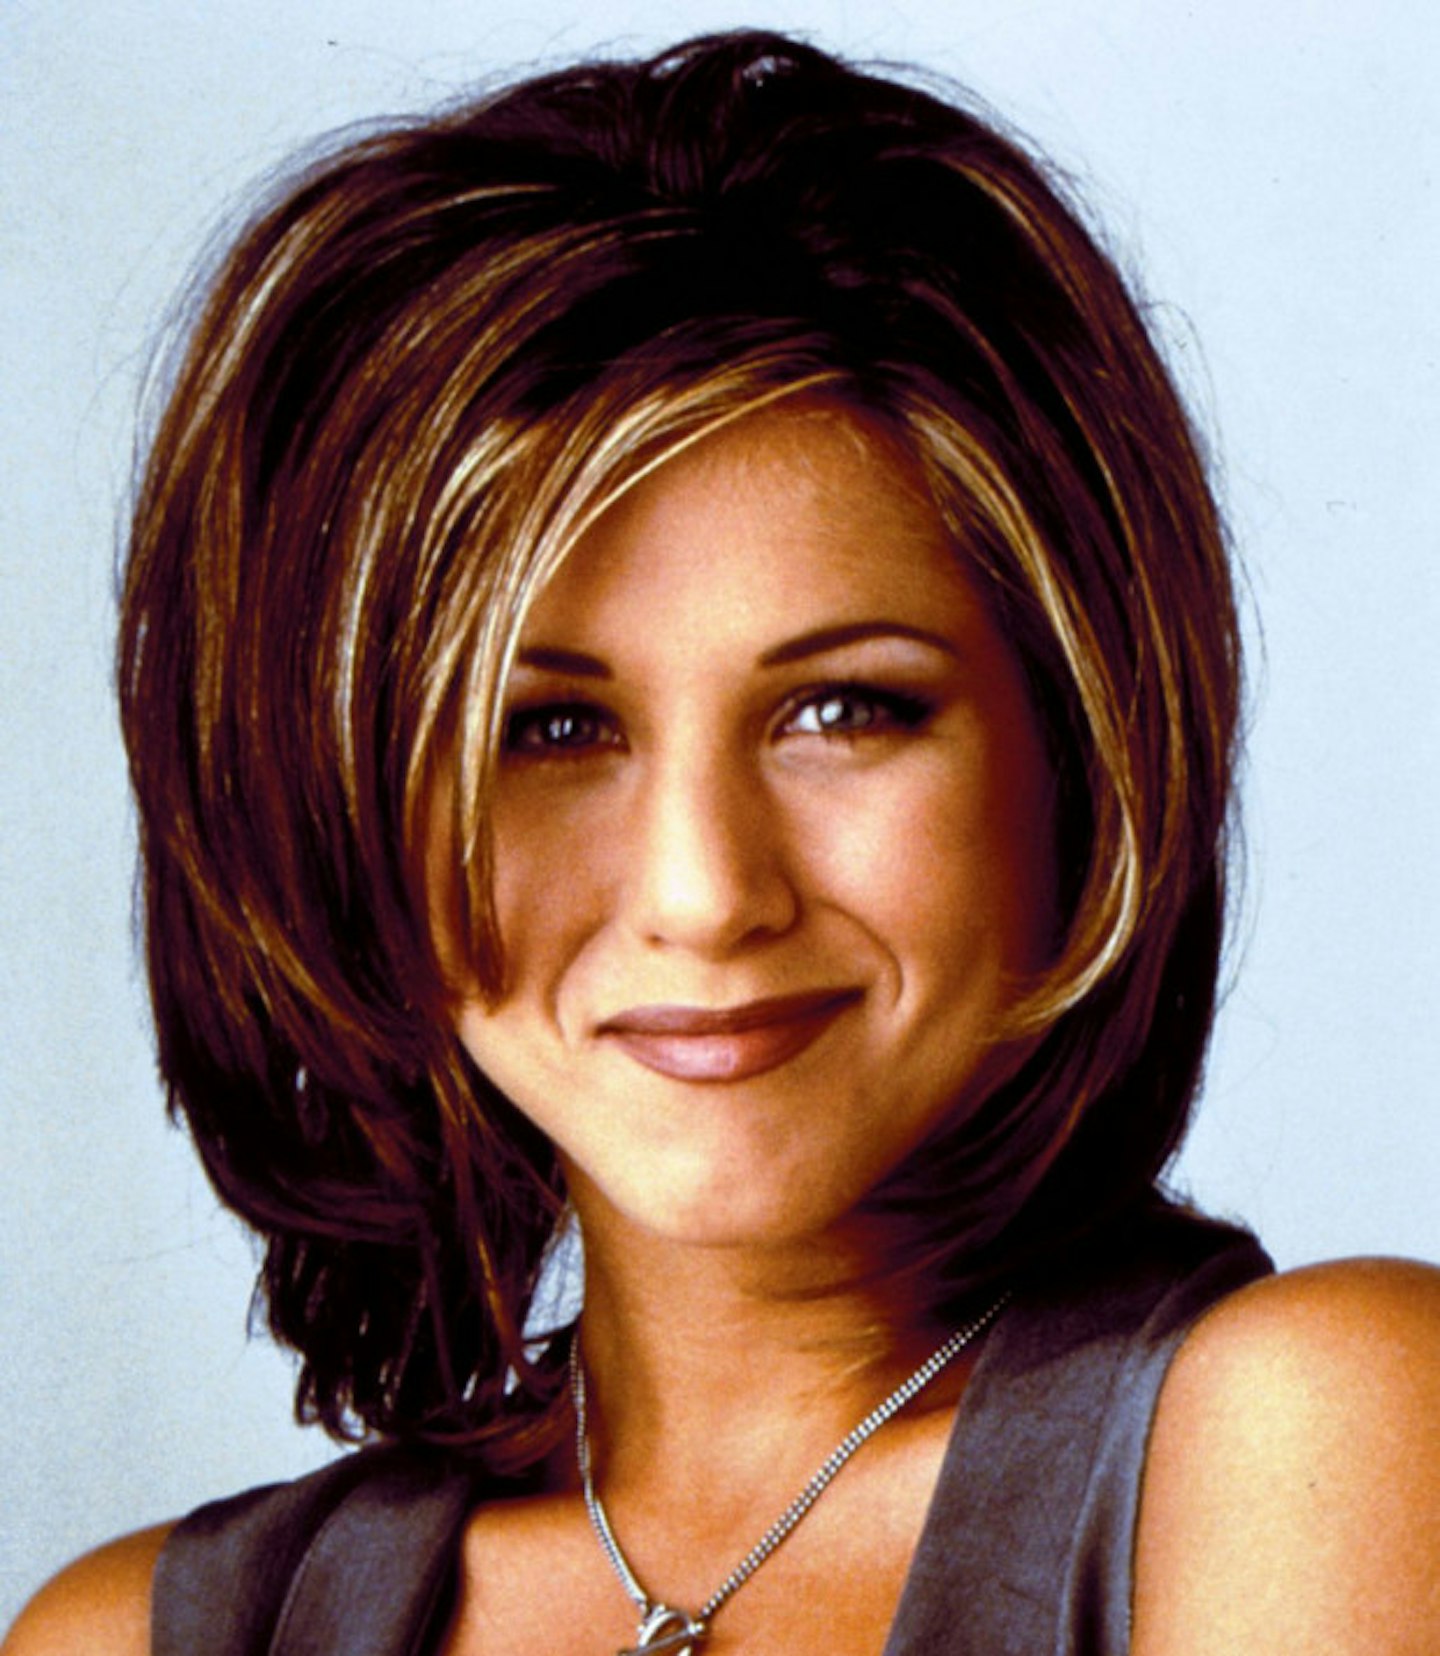 The 'Rachel' haircut